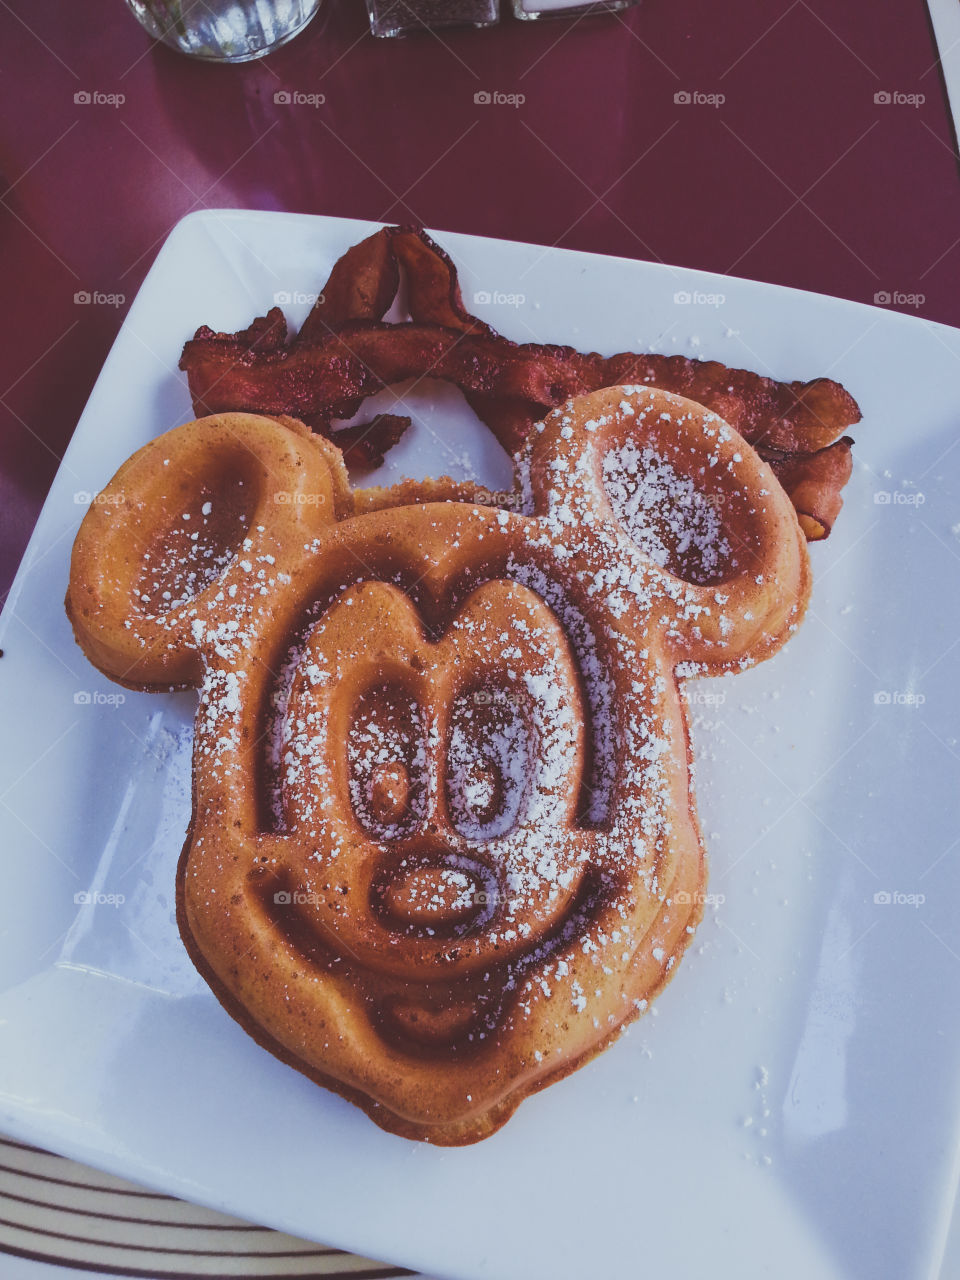 Mickey Mouse shaped waffle at Disney